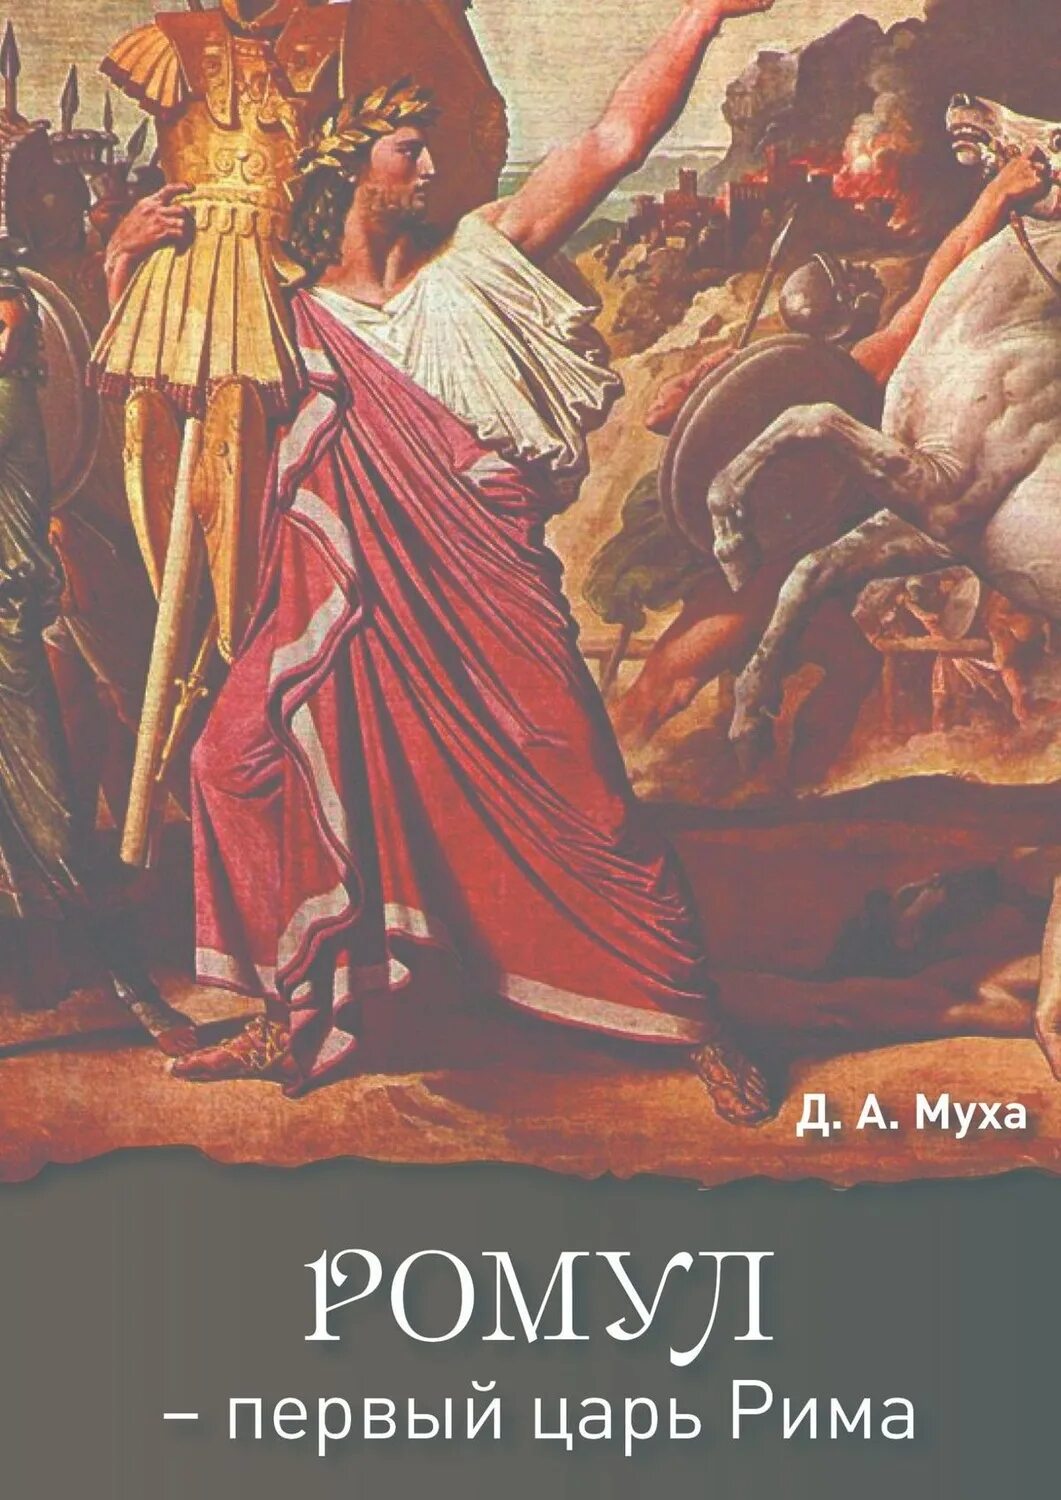 Первый царем рима стал. Ромул царь Рима. Ромул первый Римский царь. Ромул основатель Рима. Ромул царь древнего Рима.